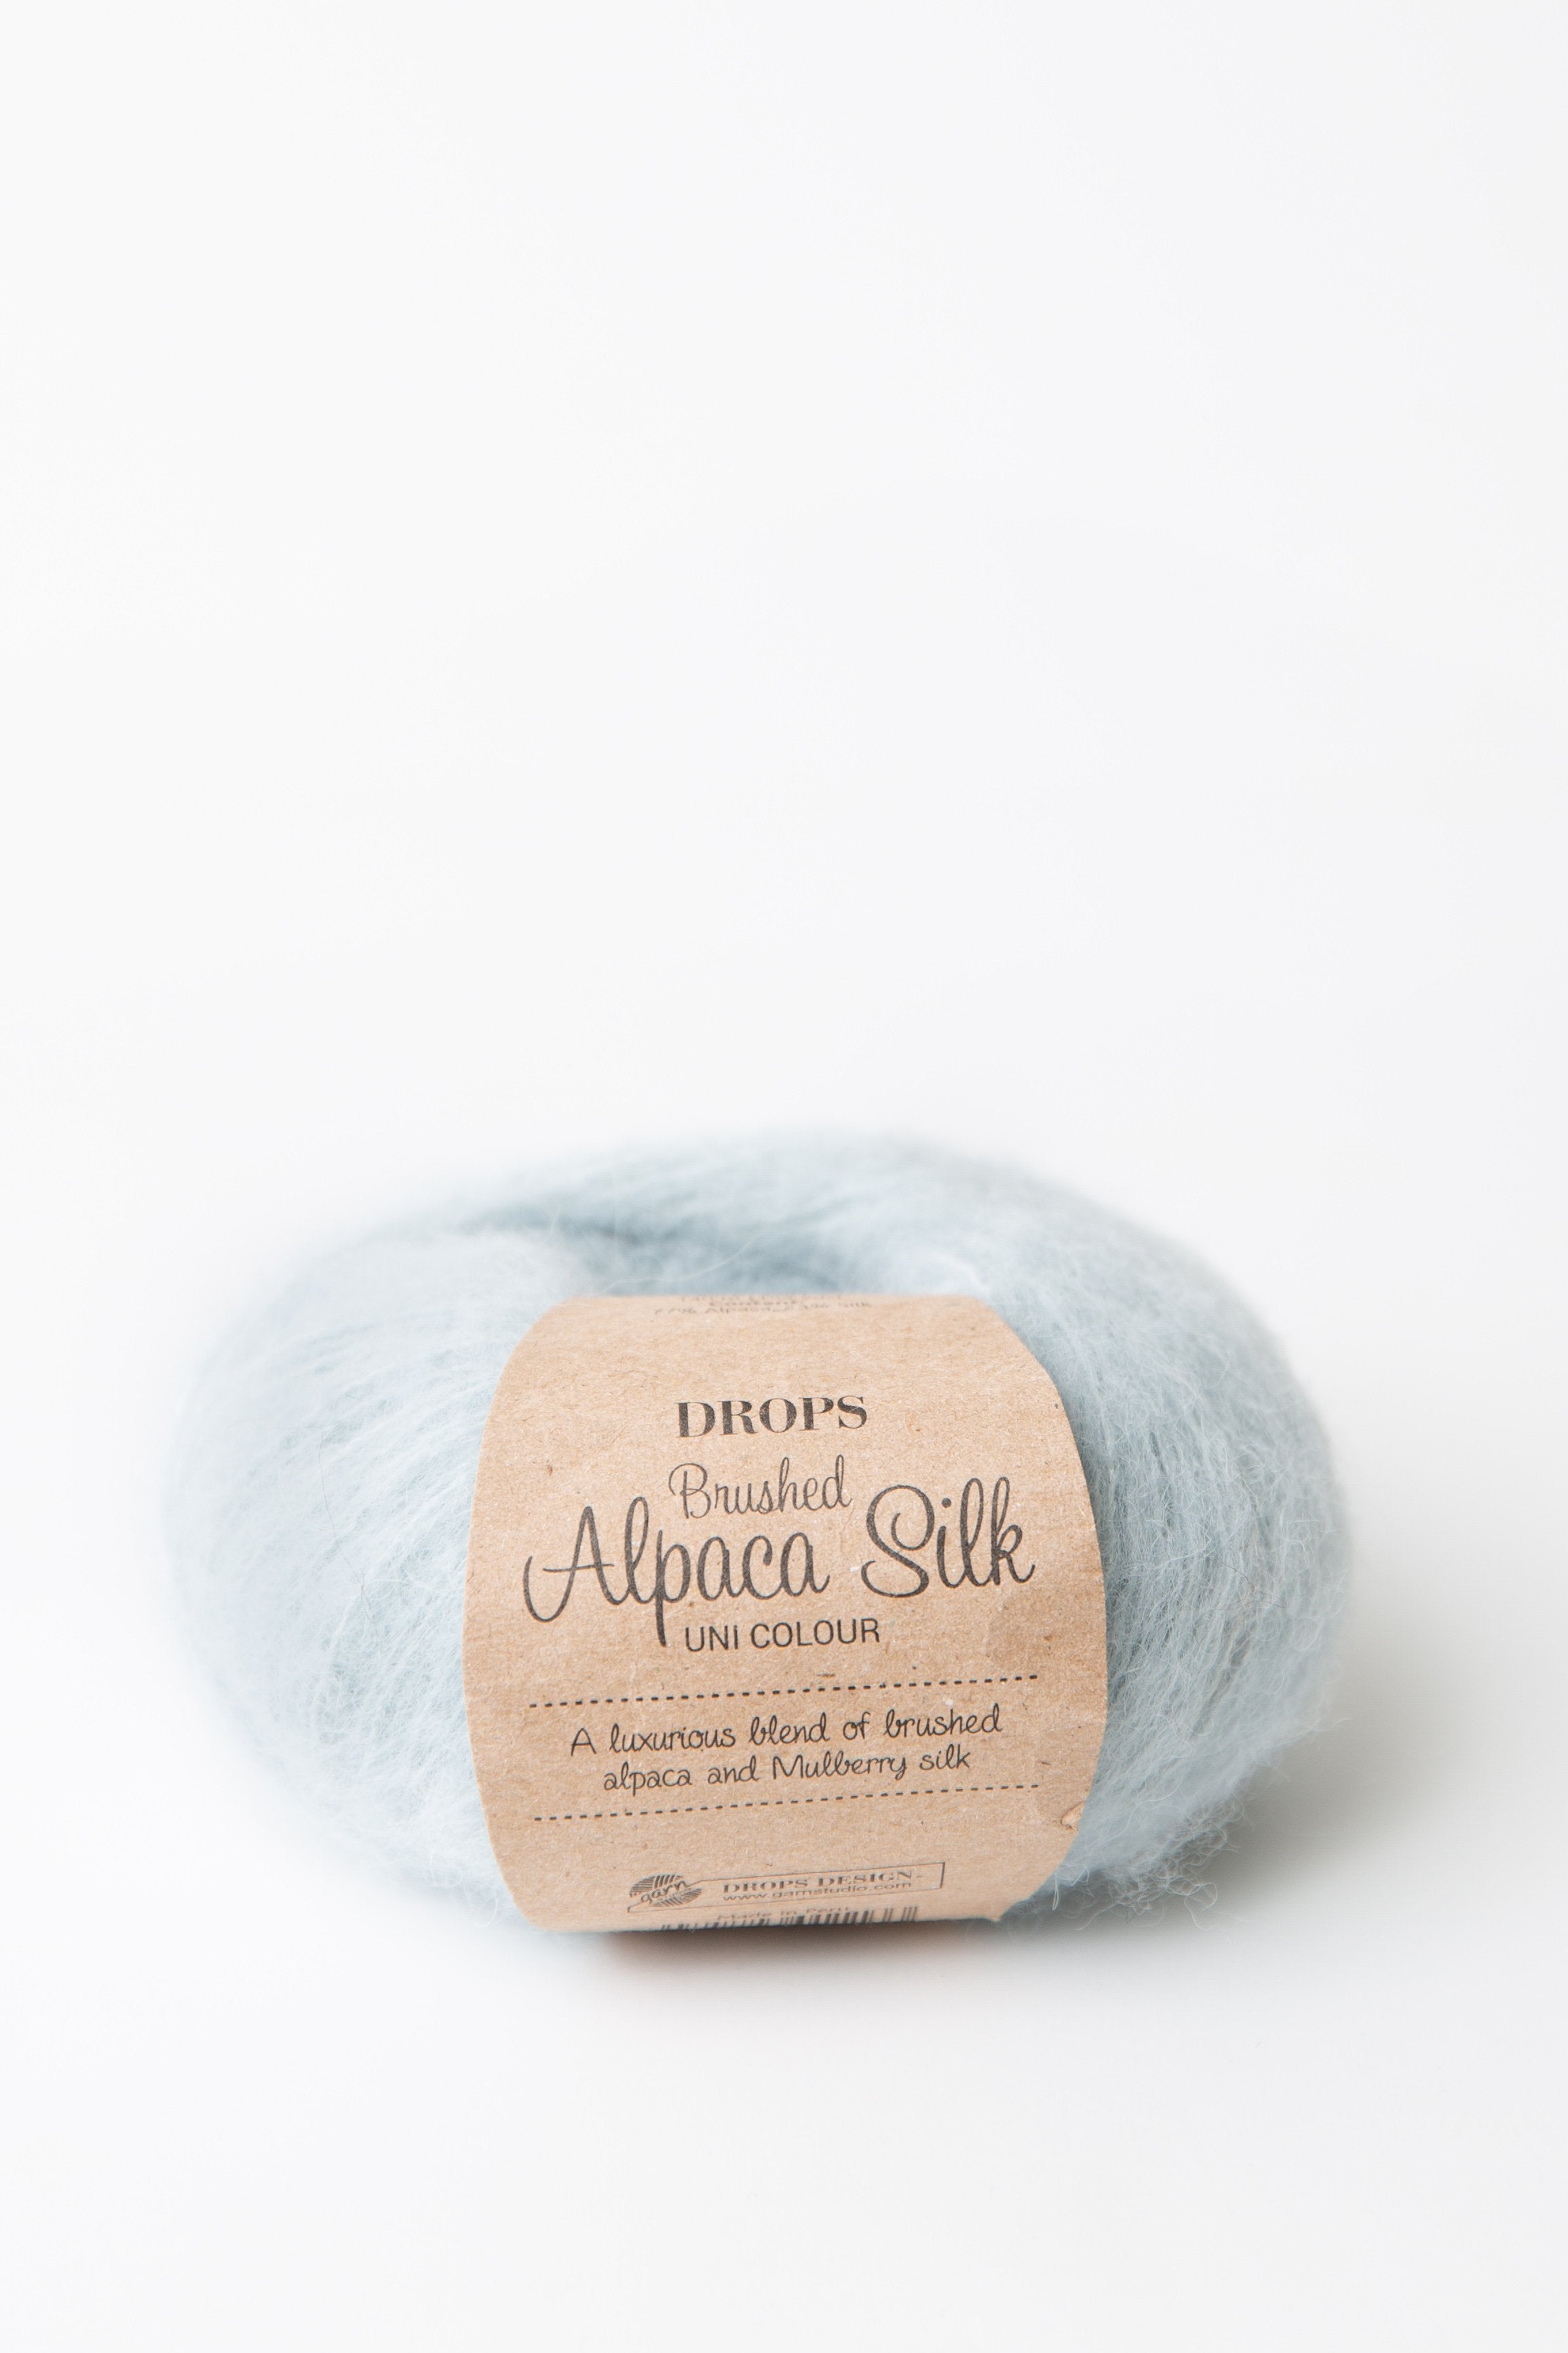 fortov Inficere Du bliver bedre Brushed Alpaca Silk Drops | Shop Yarn Online Today - Beehive Wool Shop